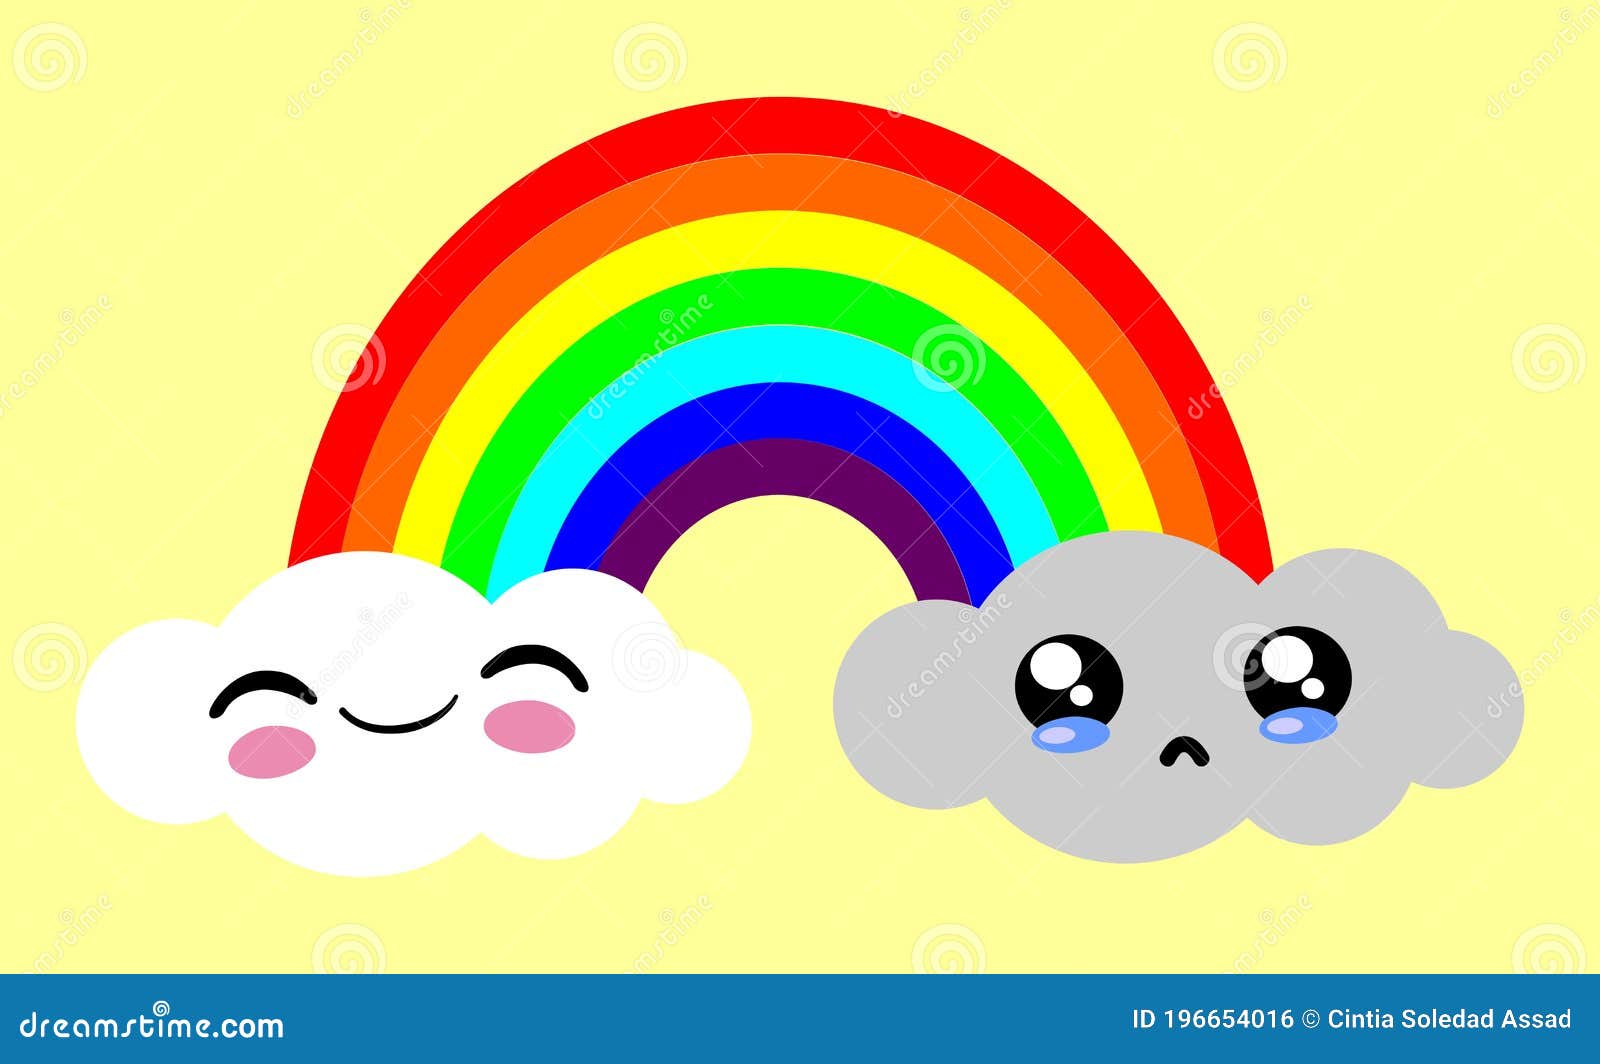 kawaii style rainbow opposite feelings, happiness and sadness